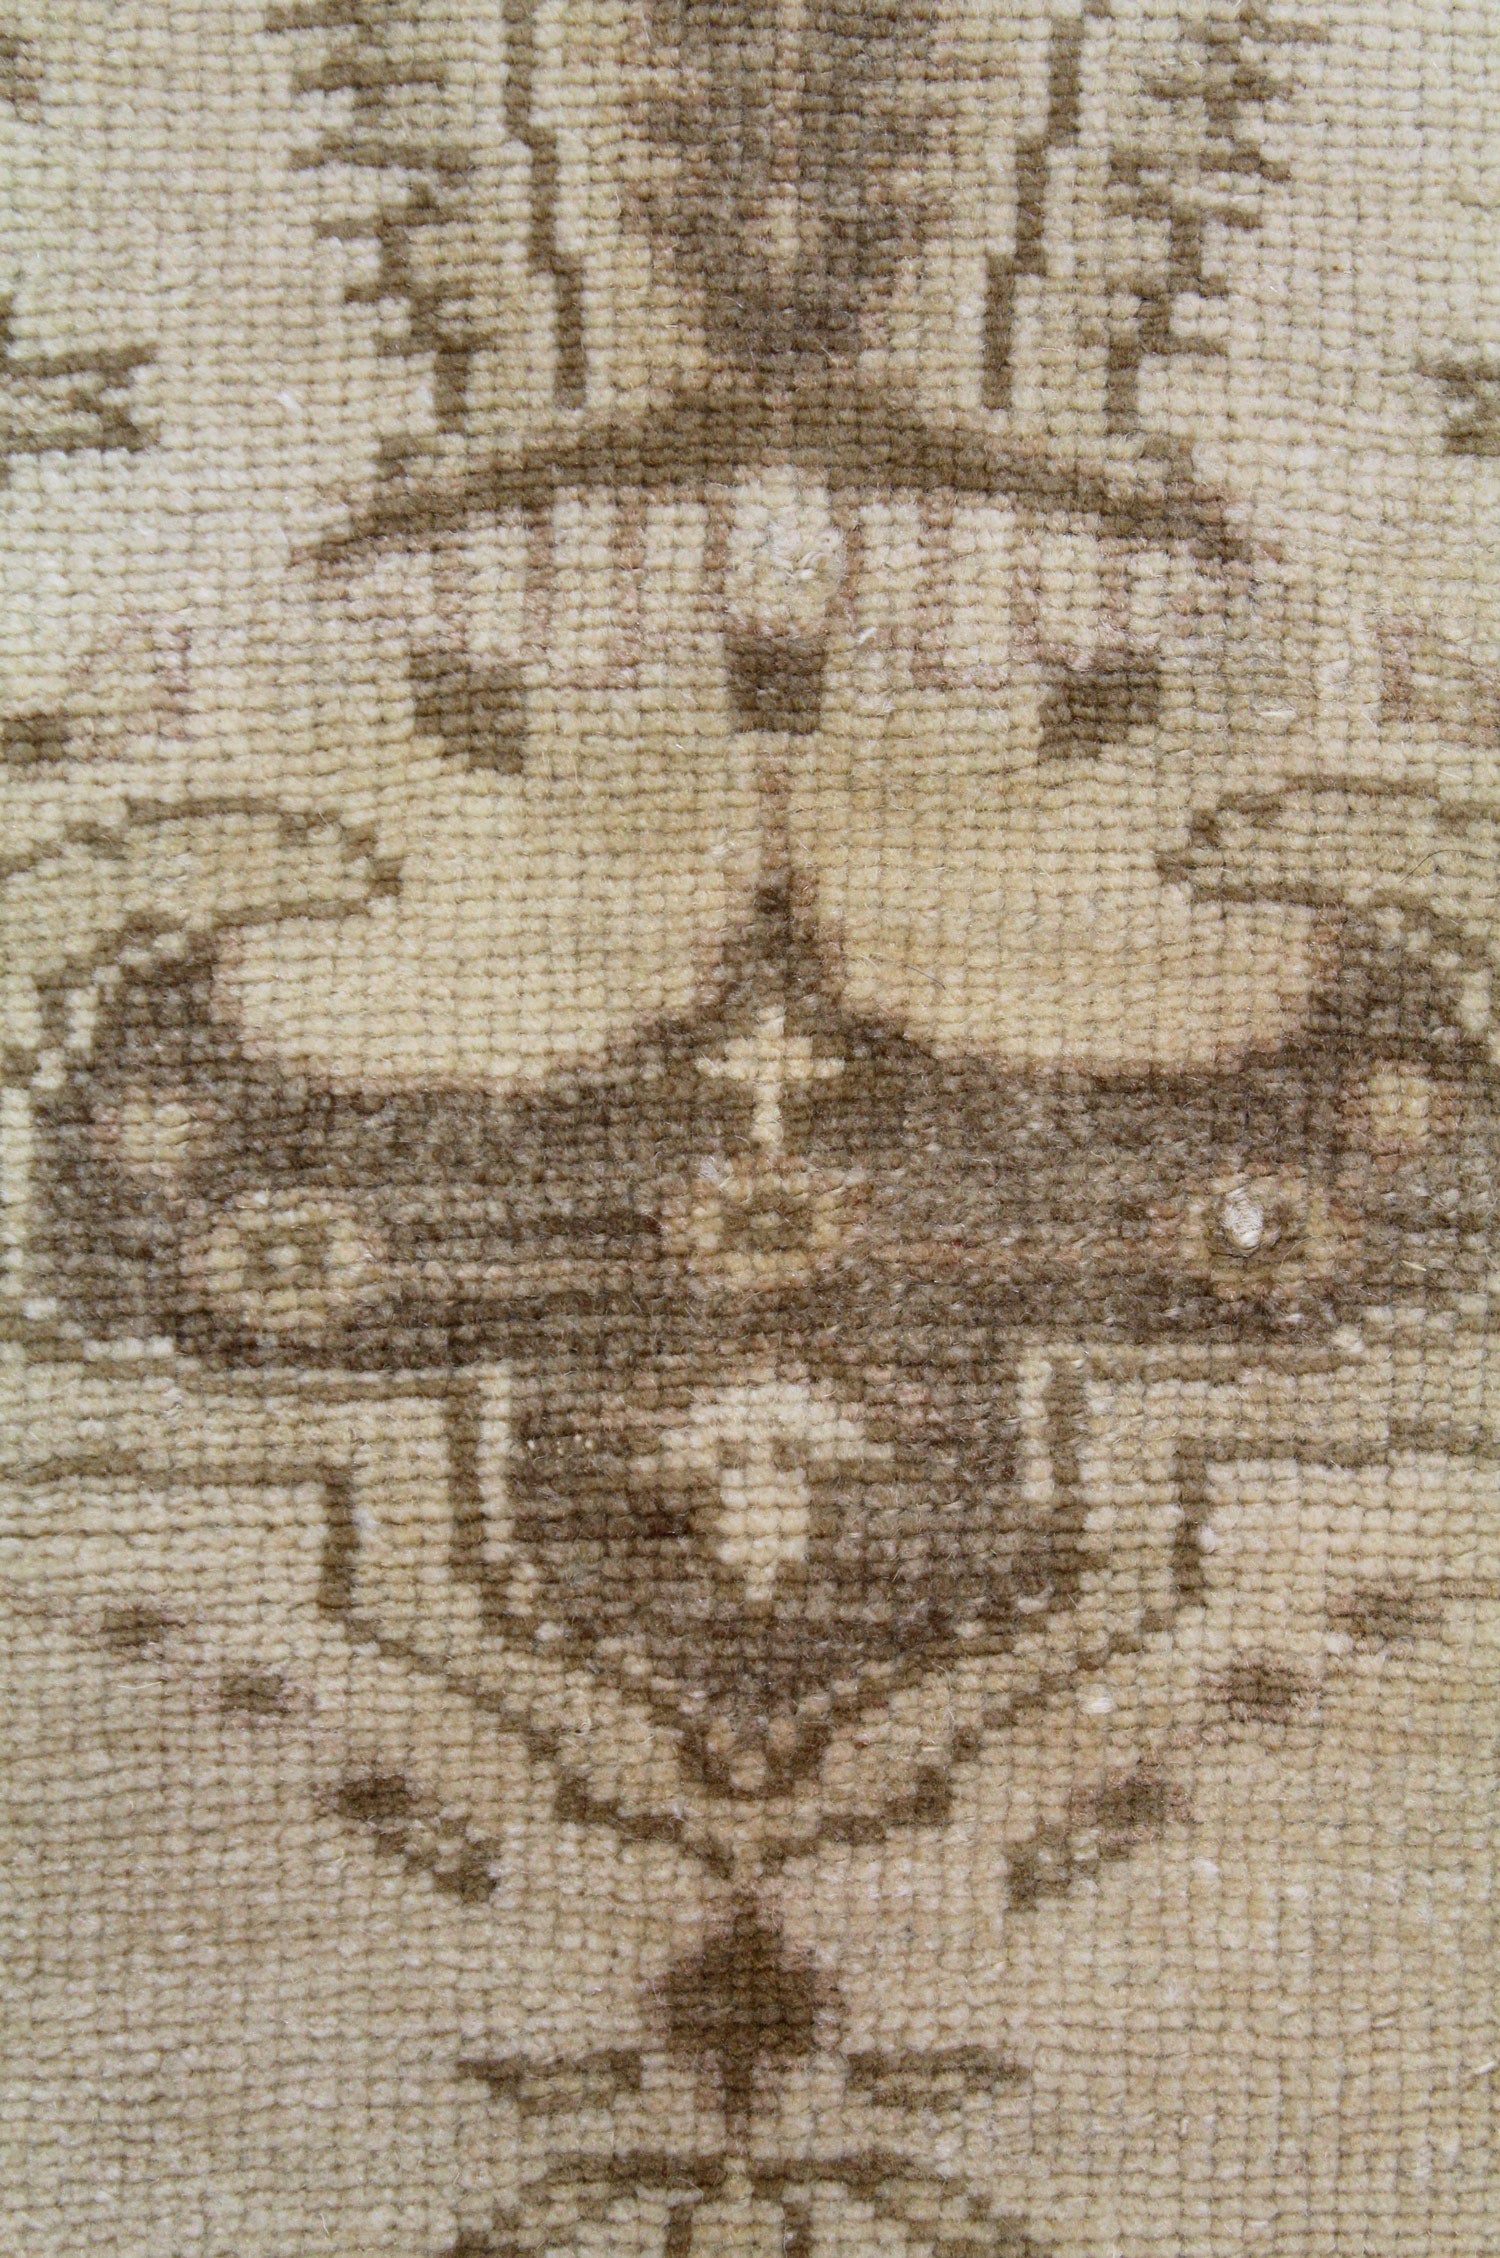 Vintage Konya Handwoven Tribal Rug, J63528